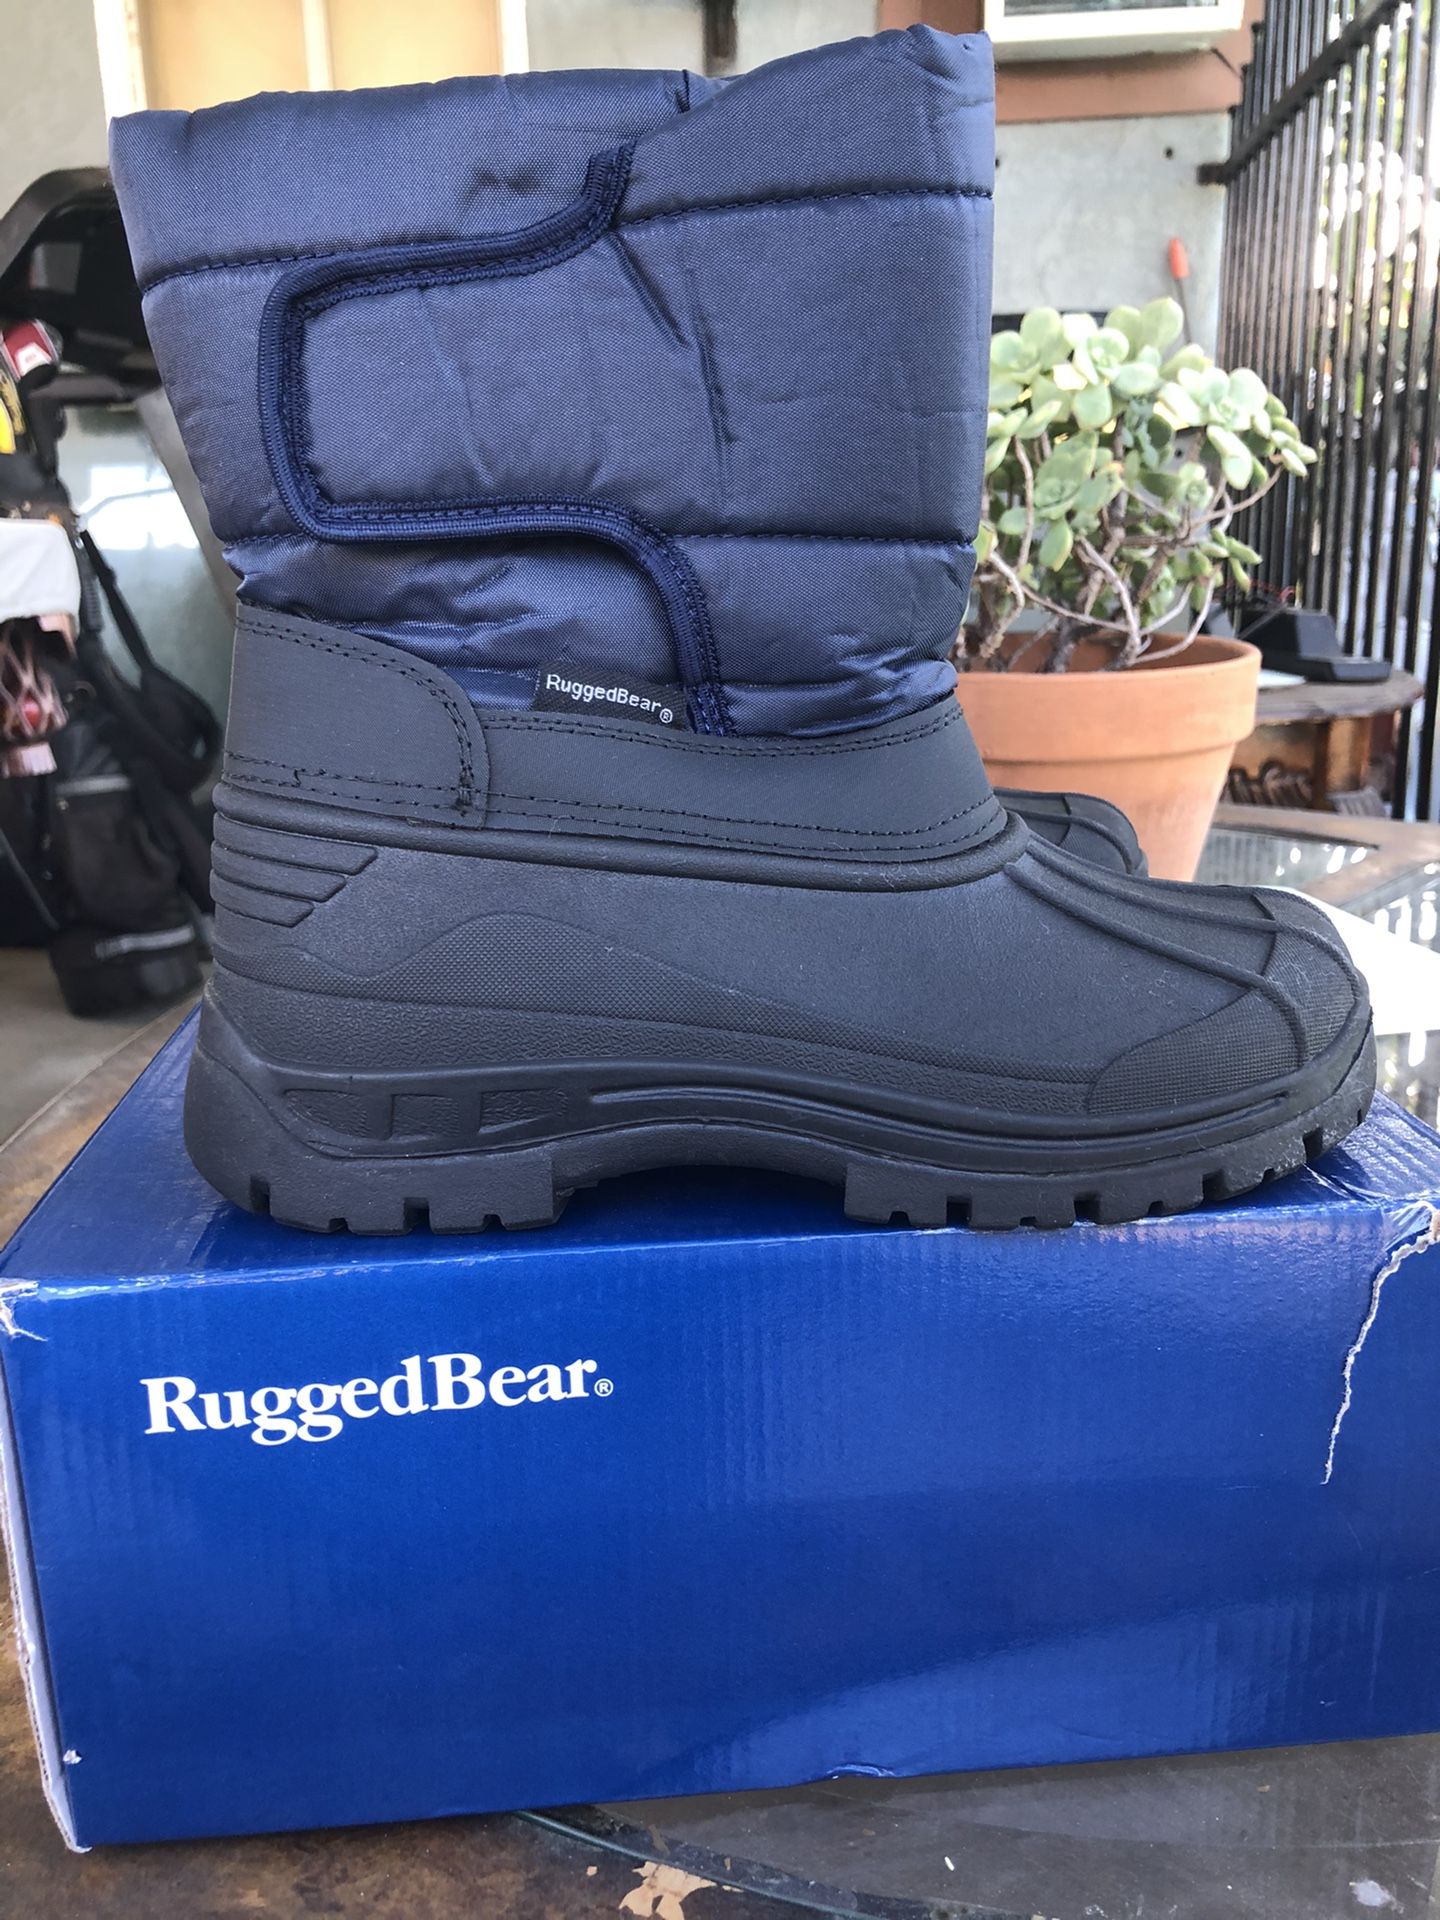 Rugged Bear Kids Snow Boots